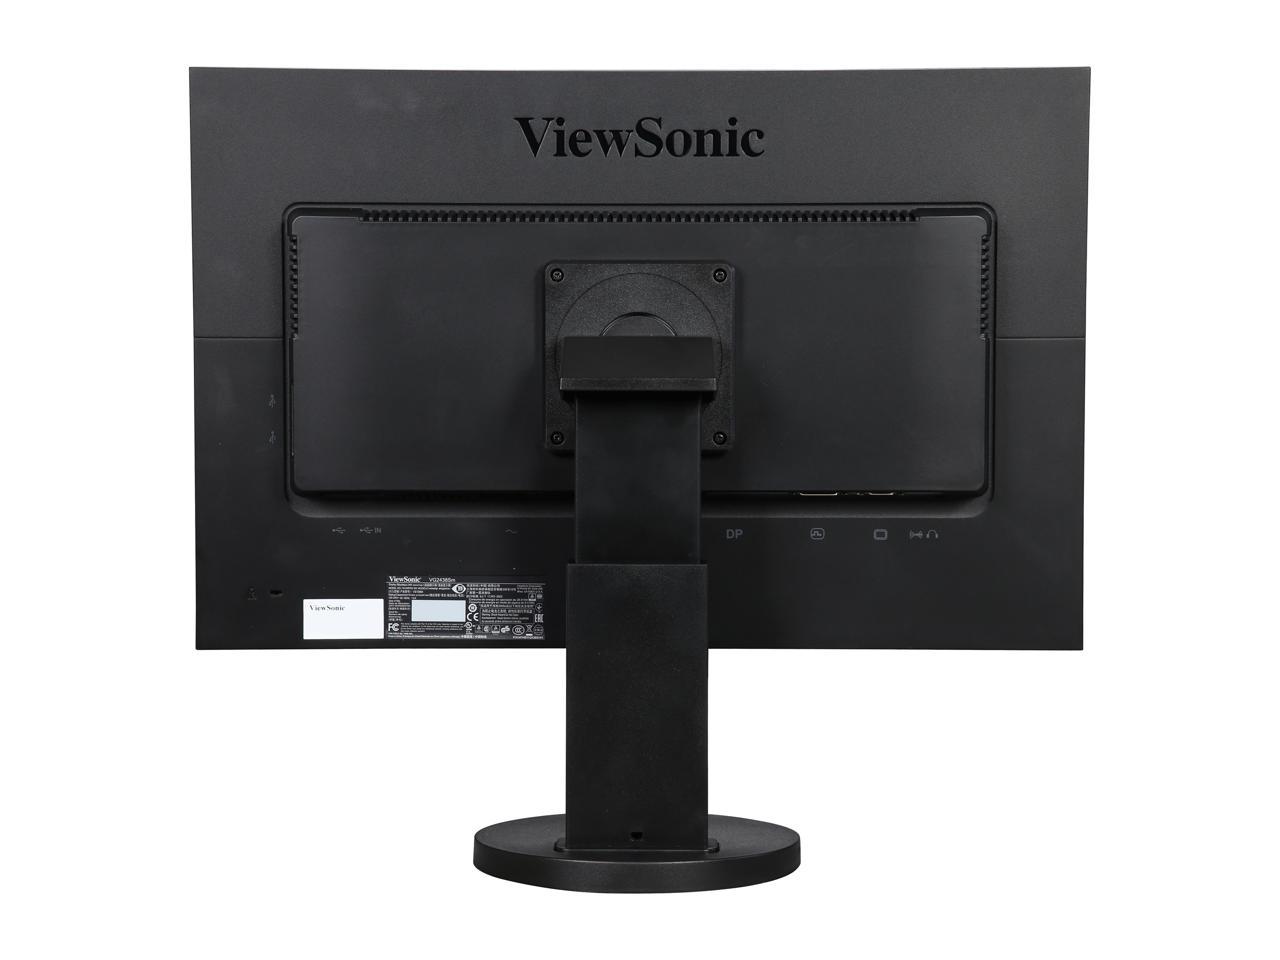 ViewSonic VG2438SM 24" 1920 x 1200 5ms (GTG) VGA DVI-D DisplayPort USB 3.0 Hub Built-in Speakers Anti-Glare Backlit LED IPS Monitor